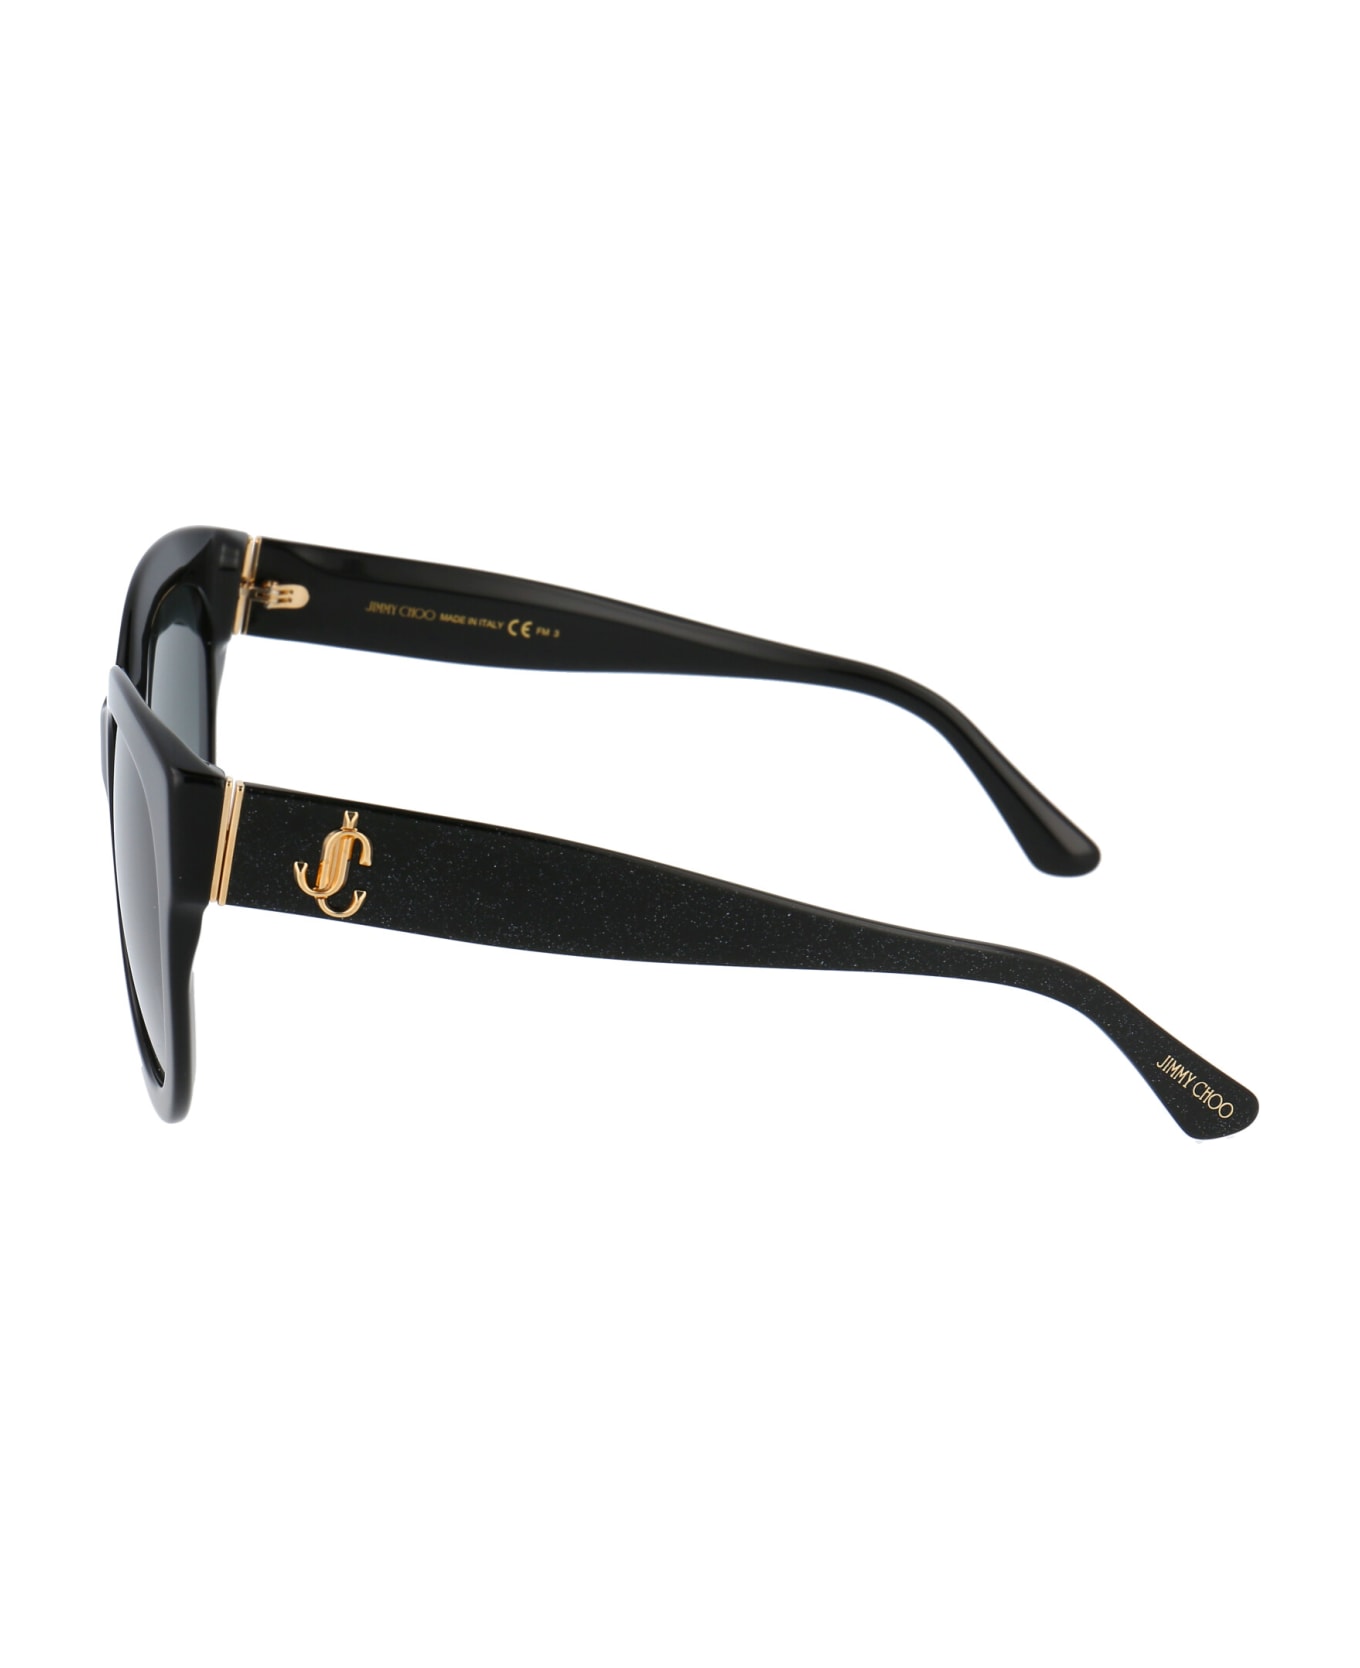 Jimmy Choo Eyewear Jill/g/s Sunglasses - NS89O BLACK GLITTER